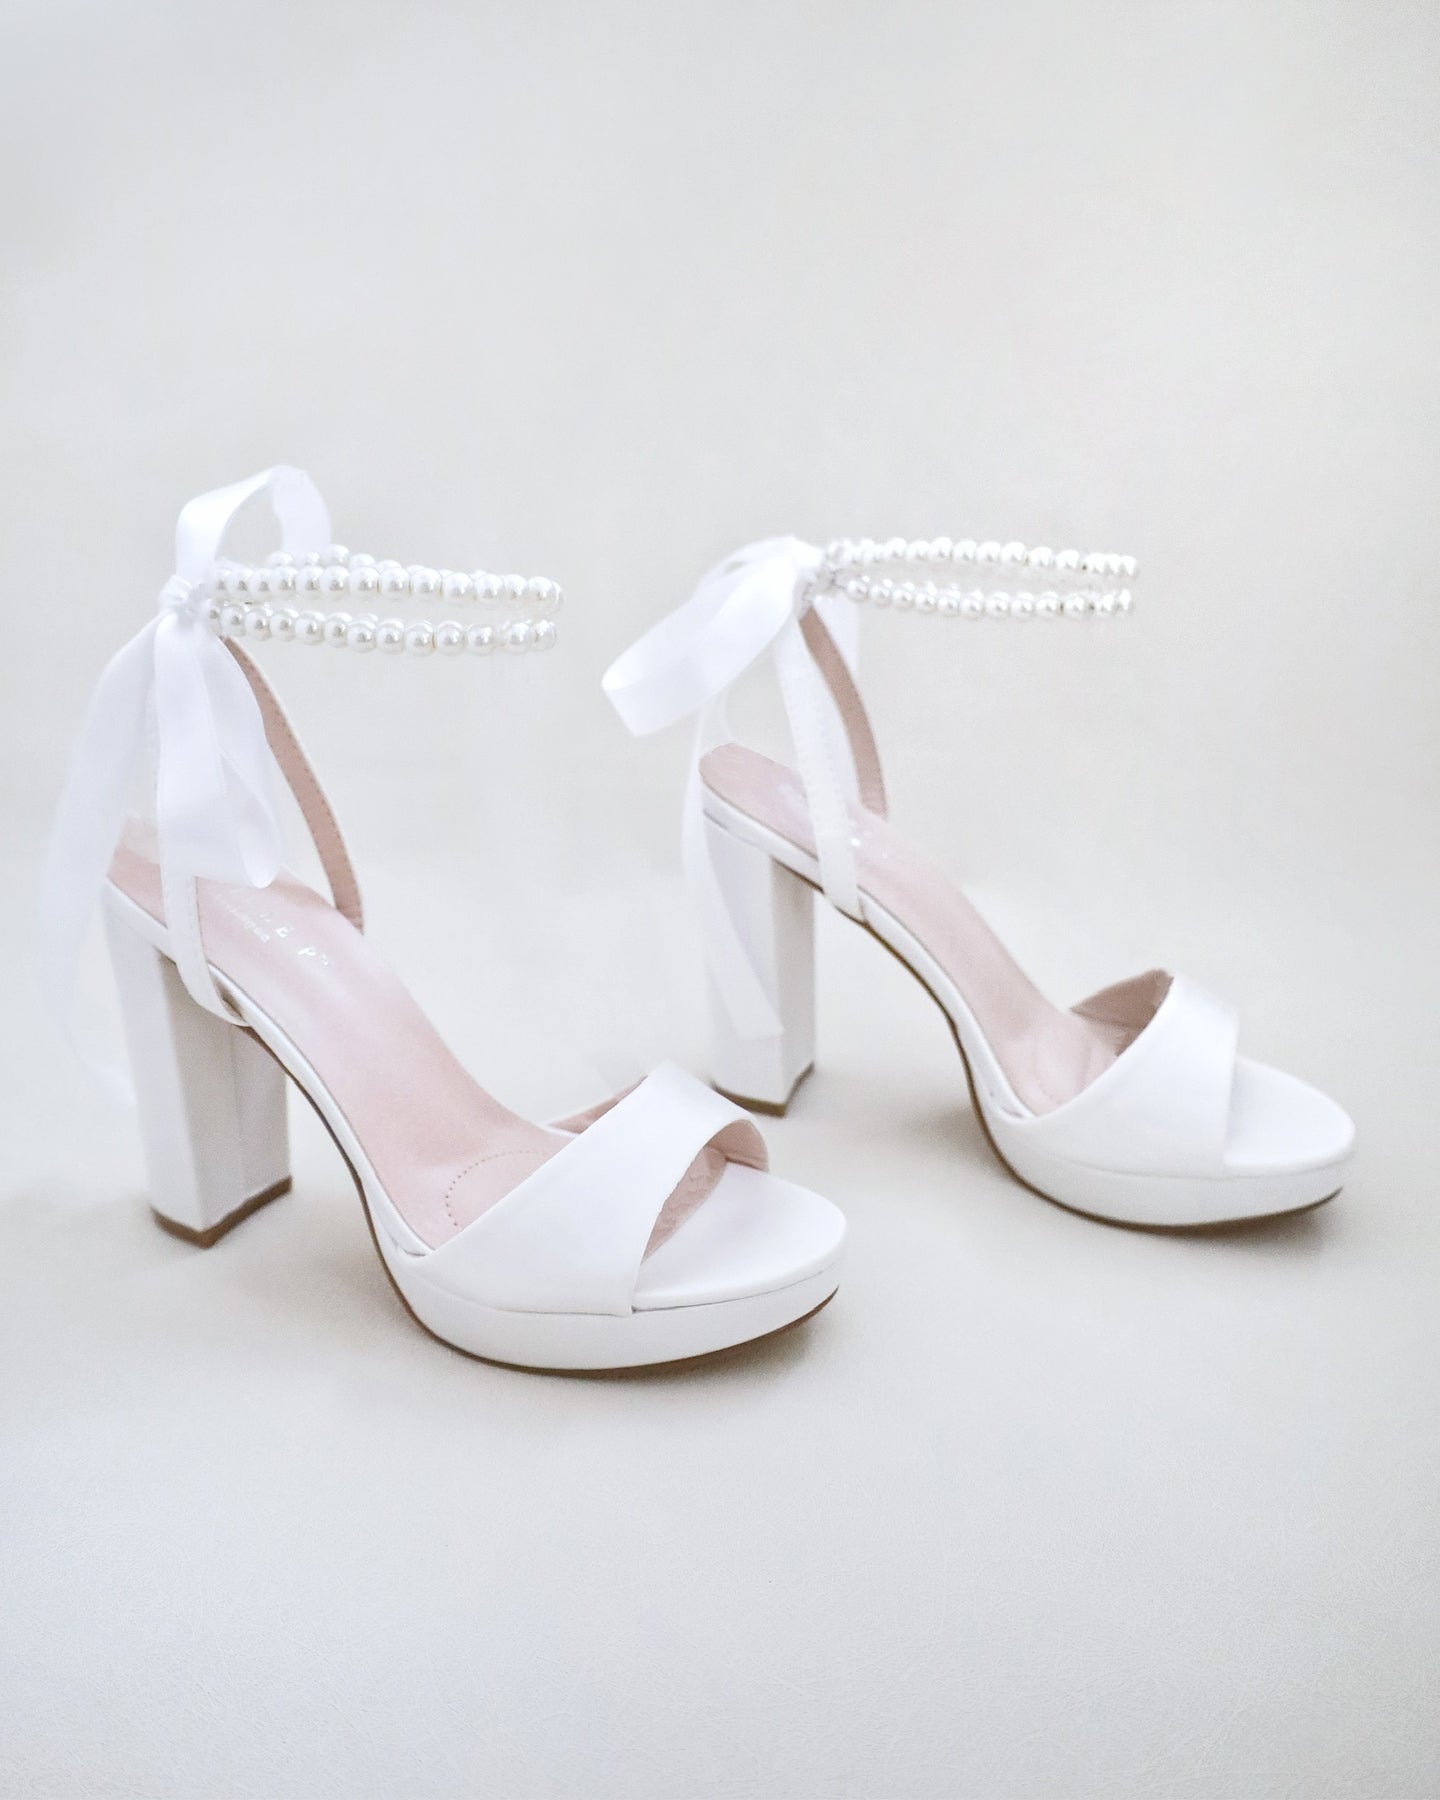 Pearl Wedding sandals, bridal sandals, flat wedding shoes, bride